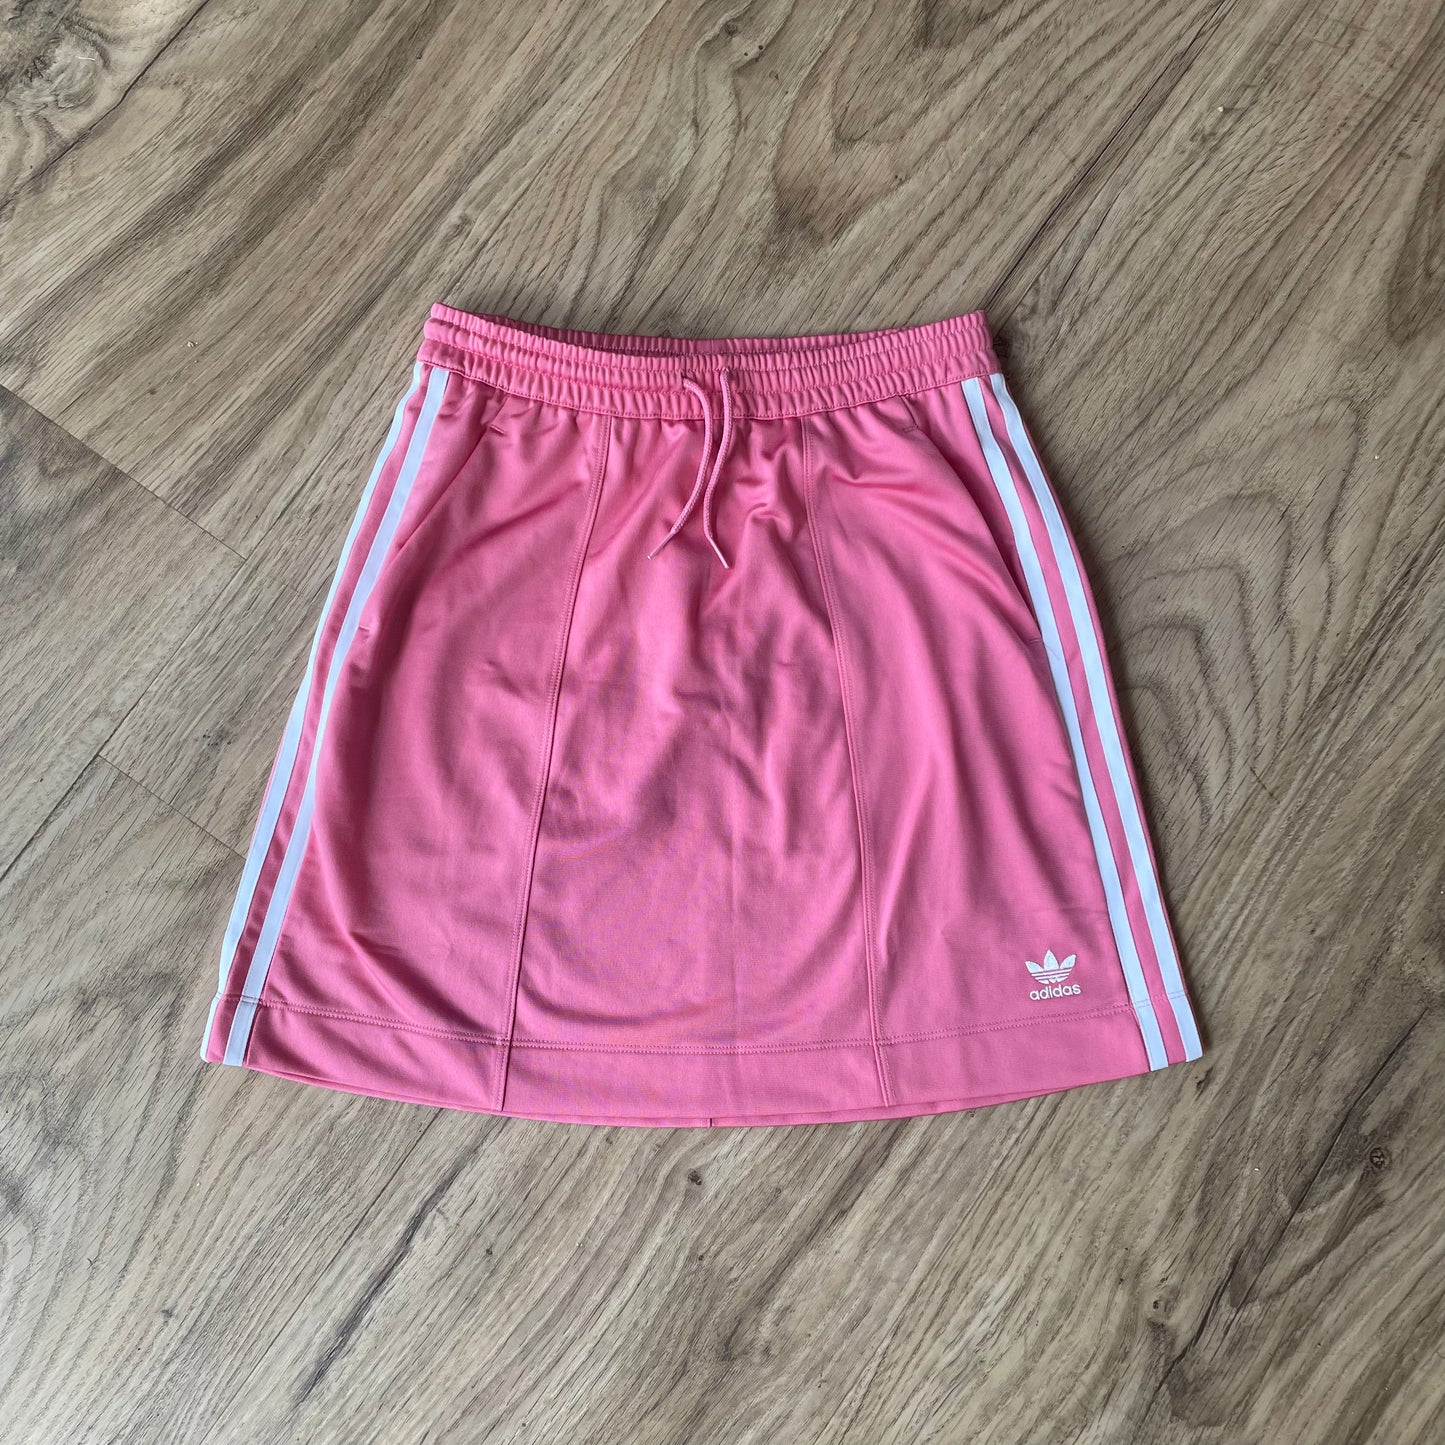 90s Adidas Skirt